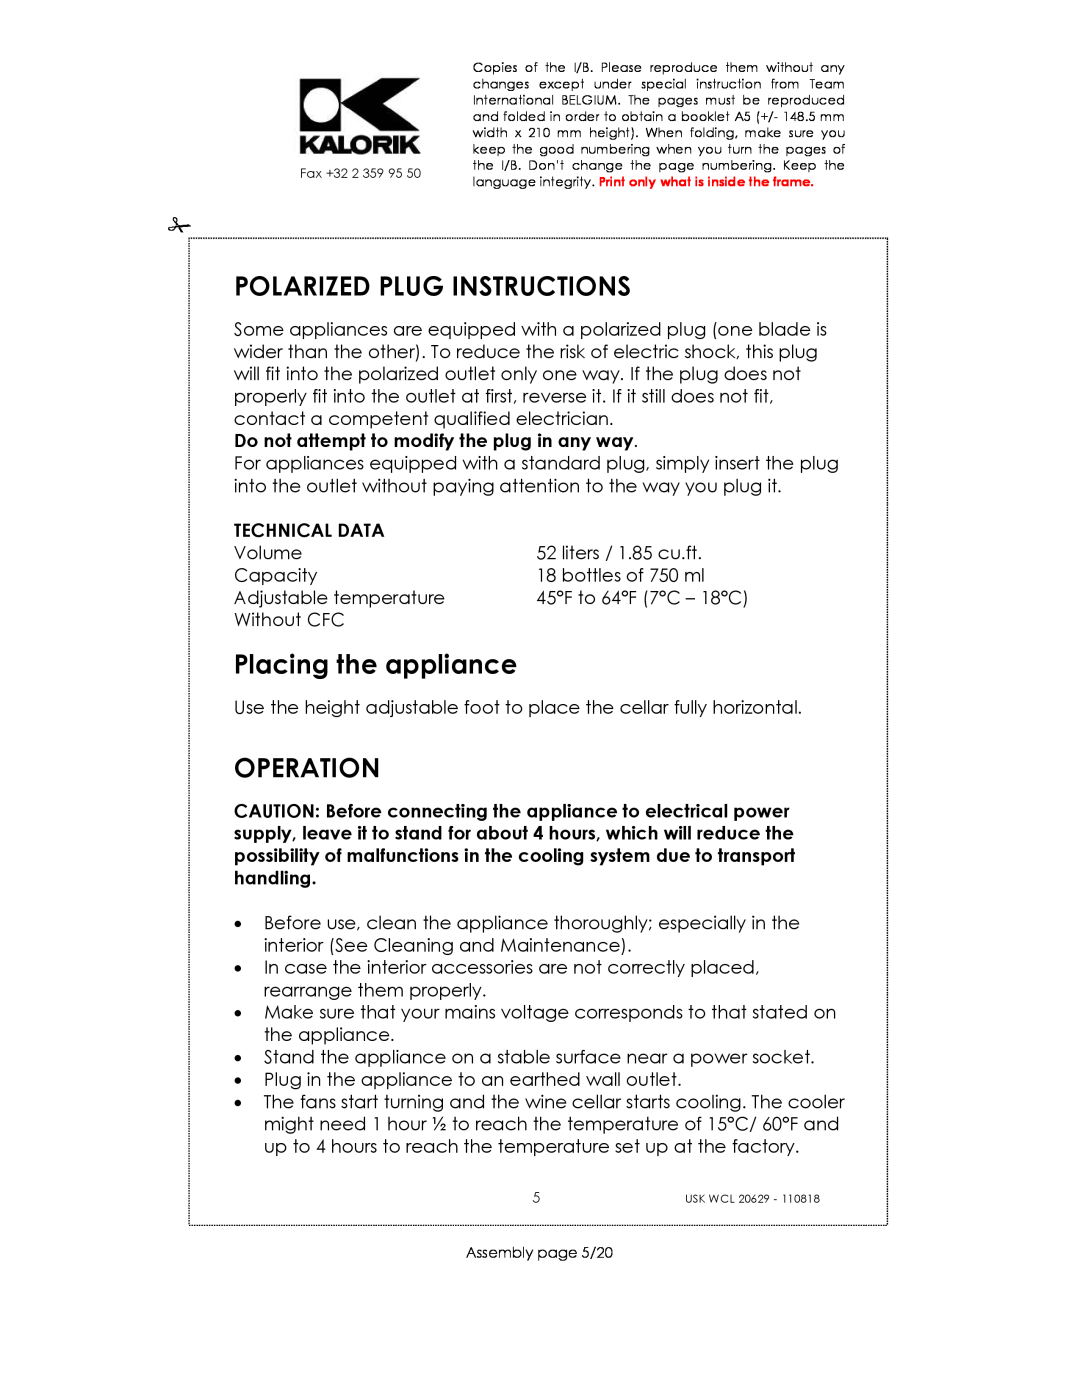 Kalorik USK WCL 20629 manual Polarized Plug Instructions, Placing the appliance, Operation, Technical Data 